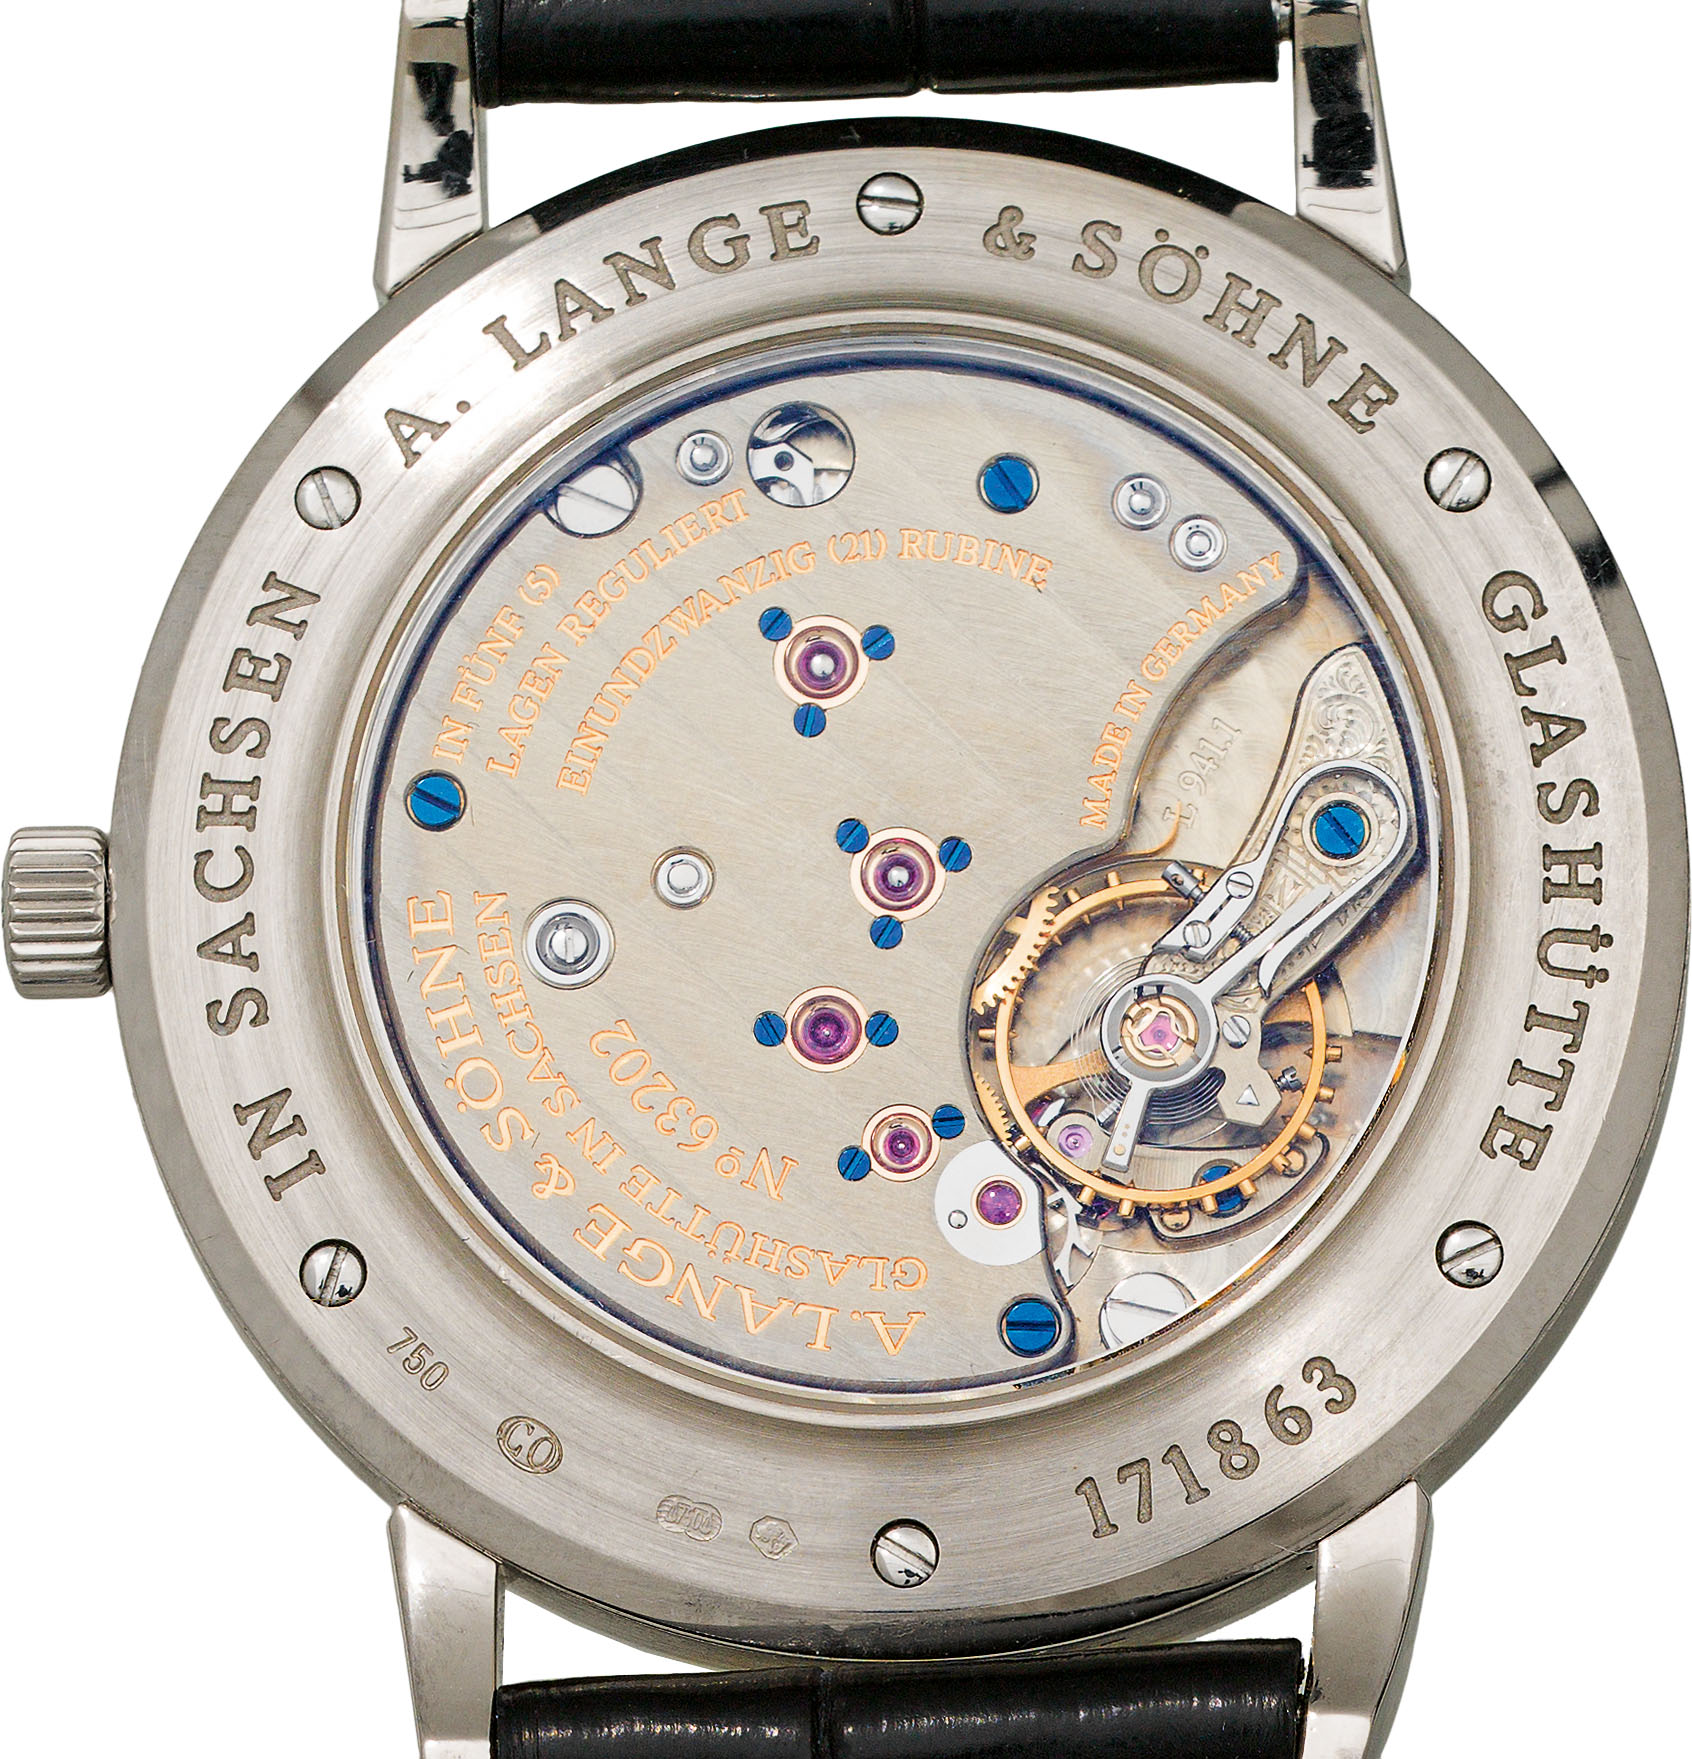 Lange & Söhne wristwatch 1815 - Image 2 of 2